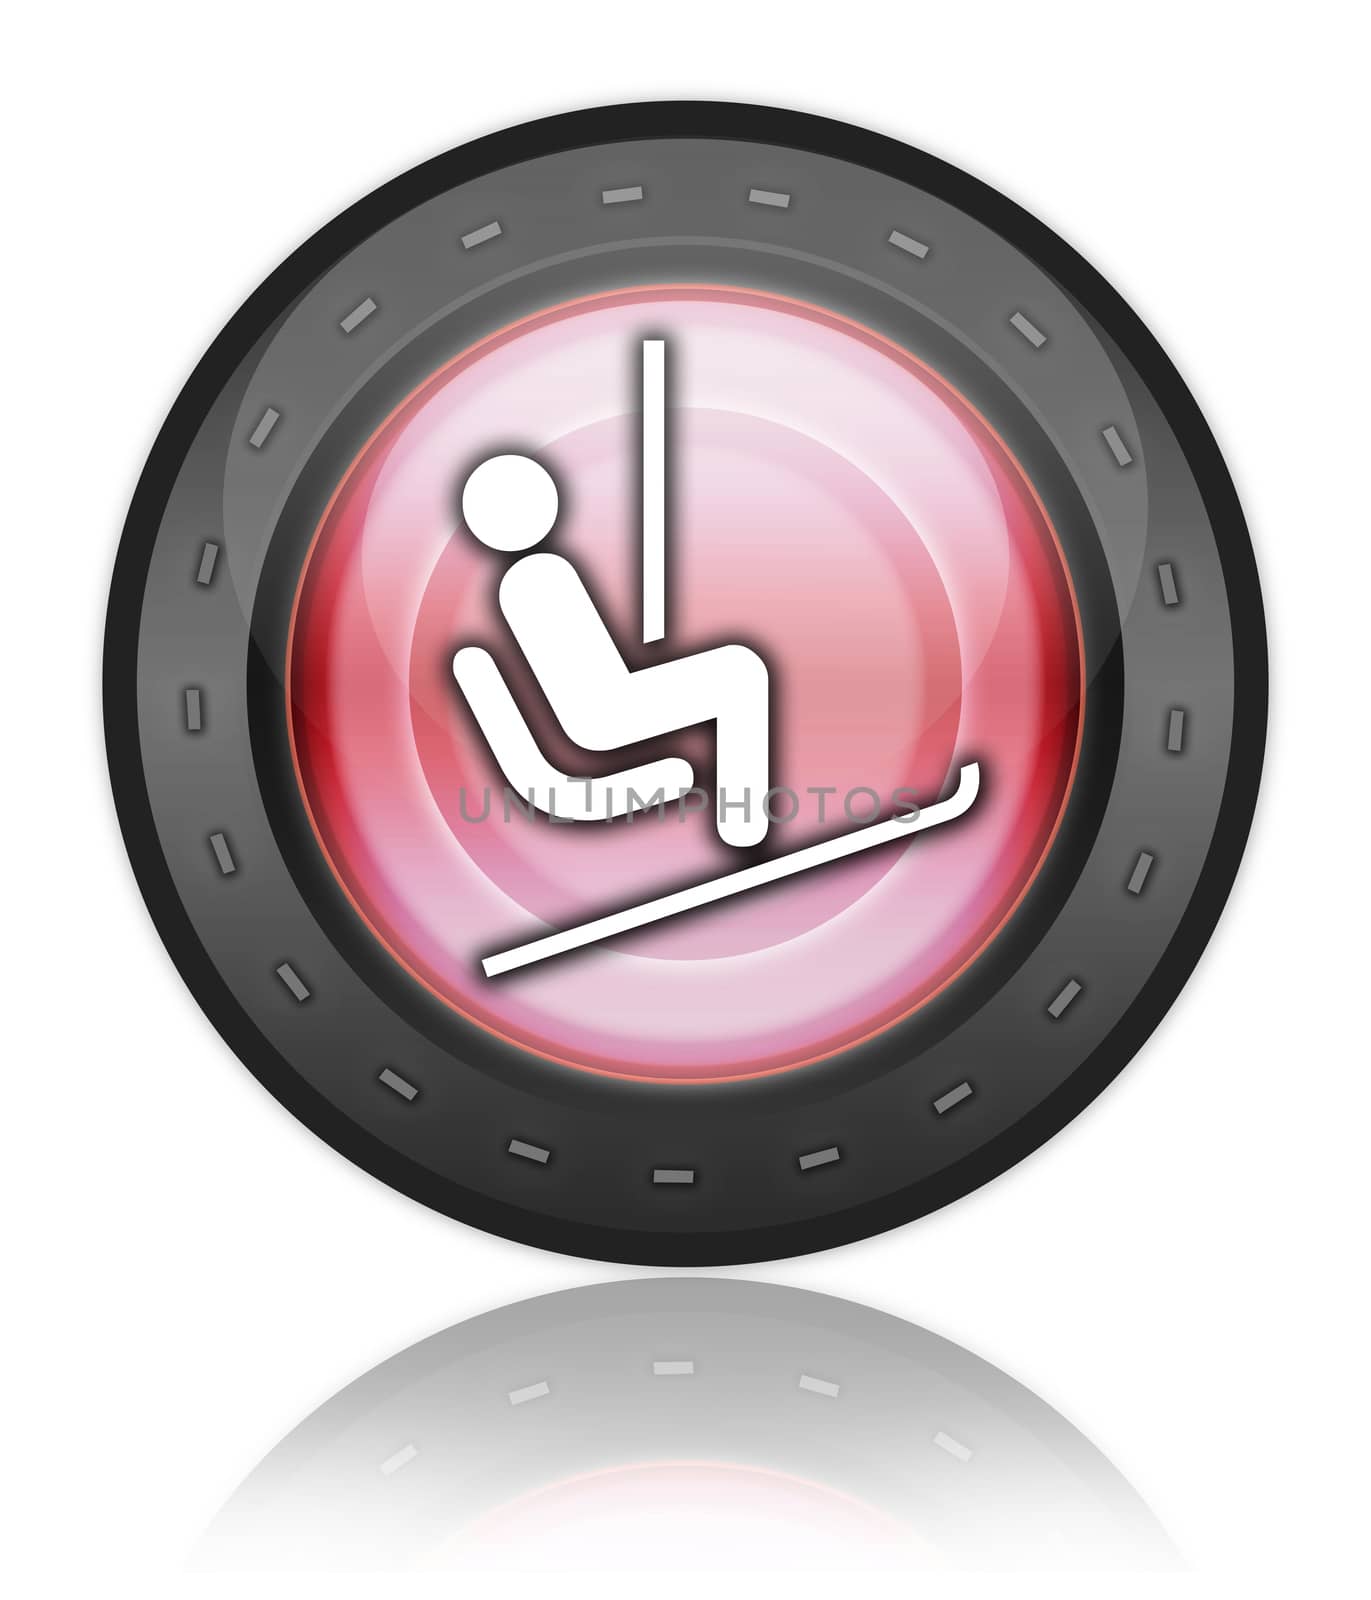 Icon, Button, Pictogram Ski Lift by mindscanner